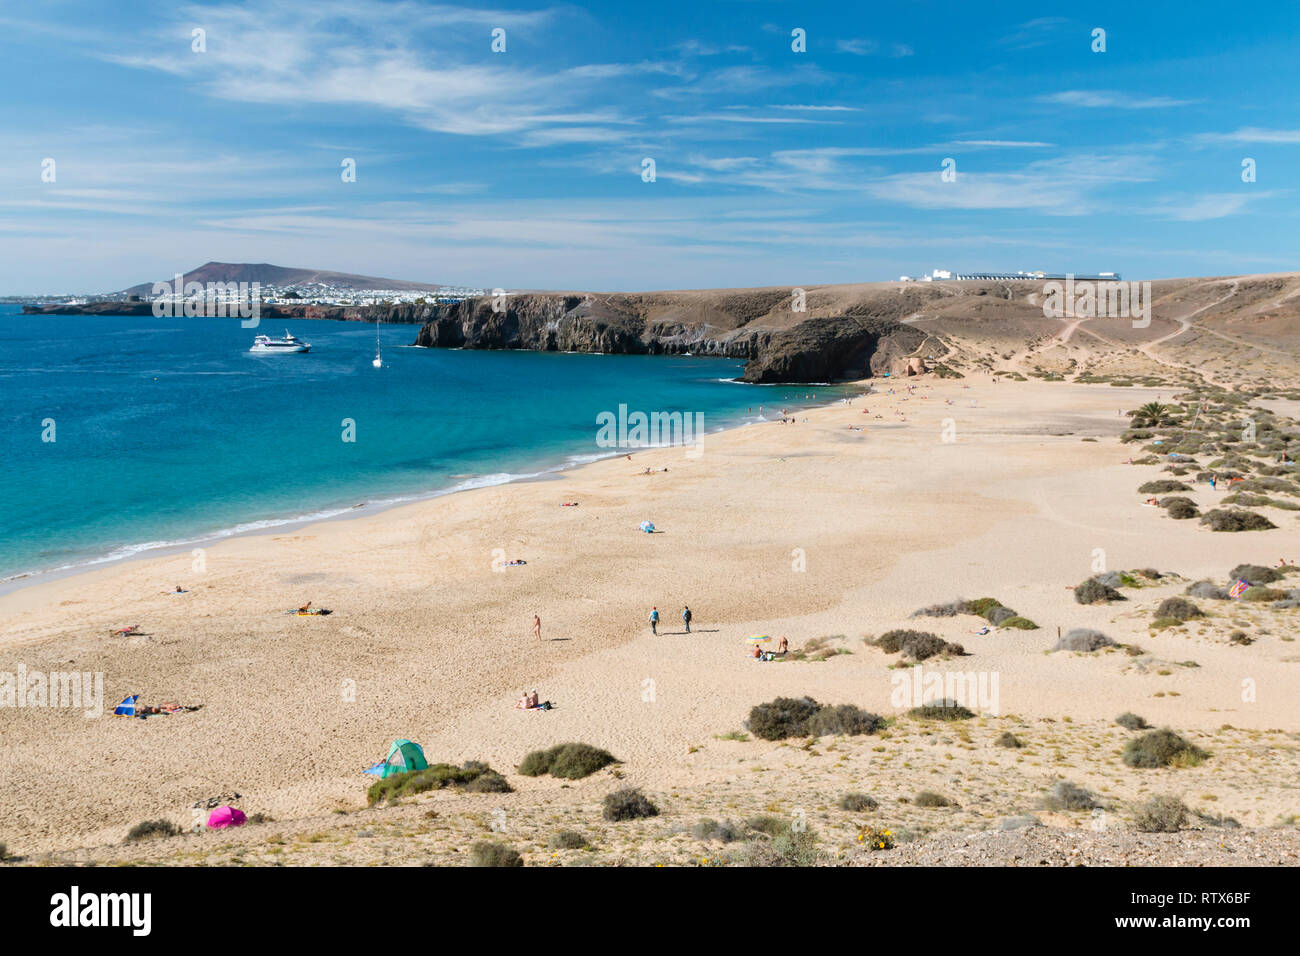 The beautiful beach Playa Mujeres, one of the papagayo beaches in Lanzarote, Spain. Stock Photo